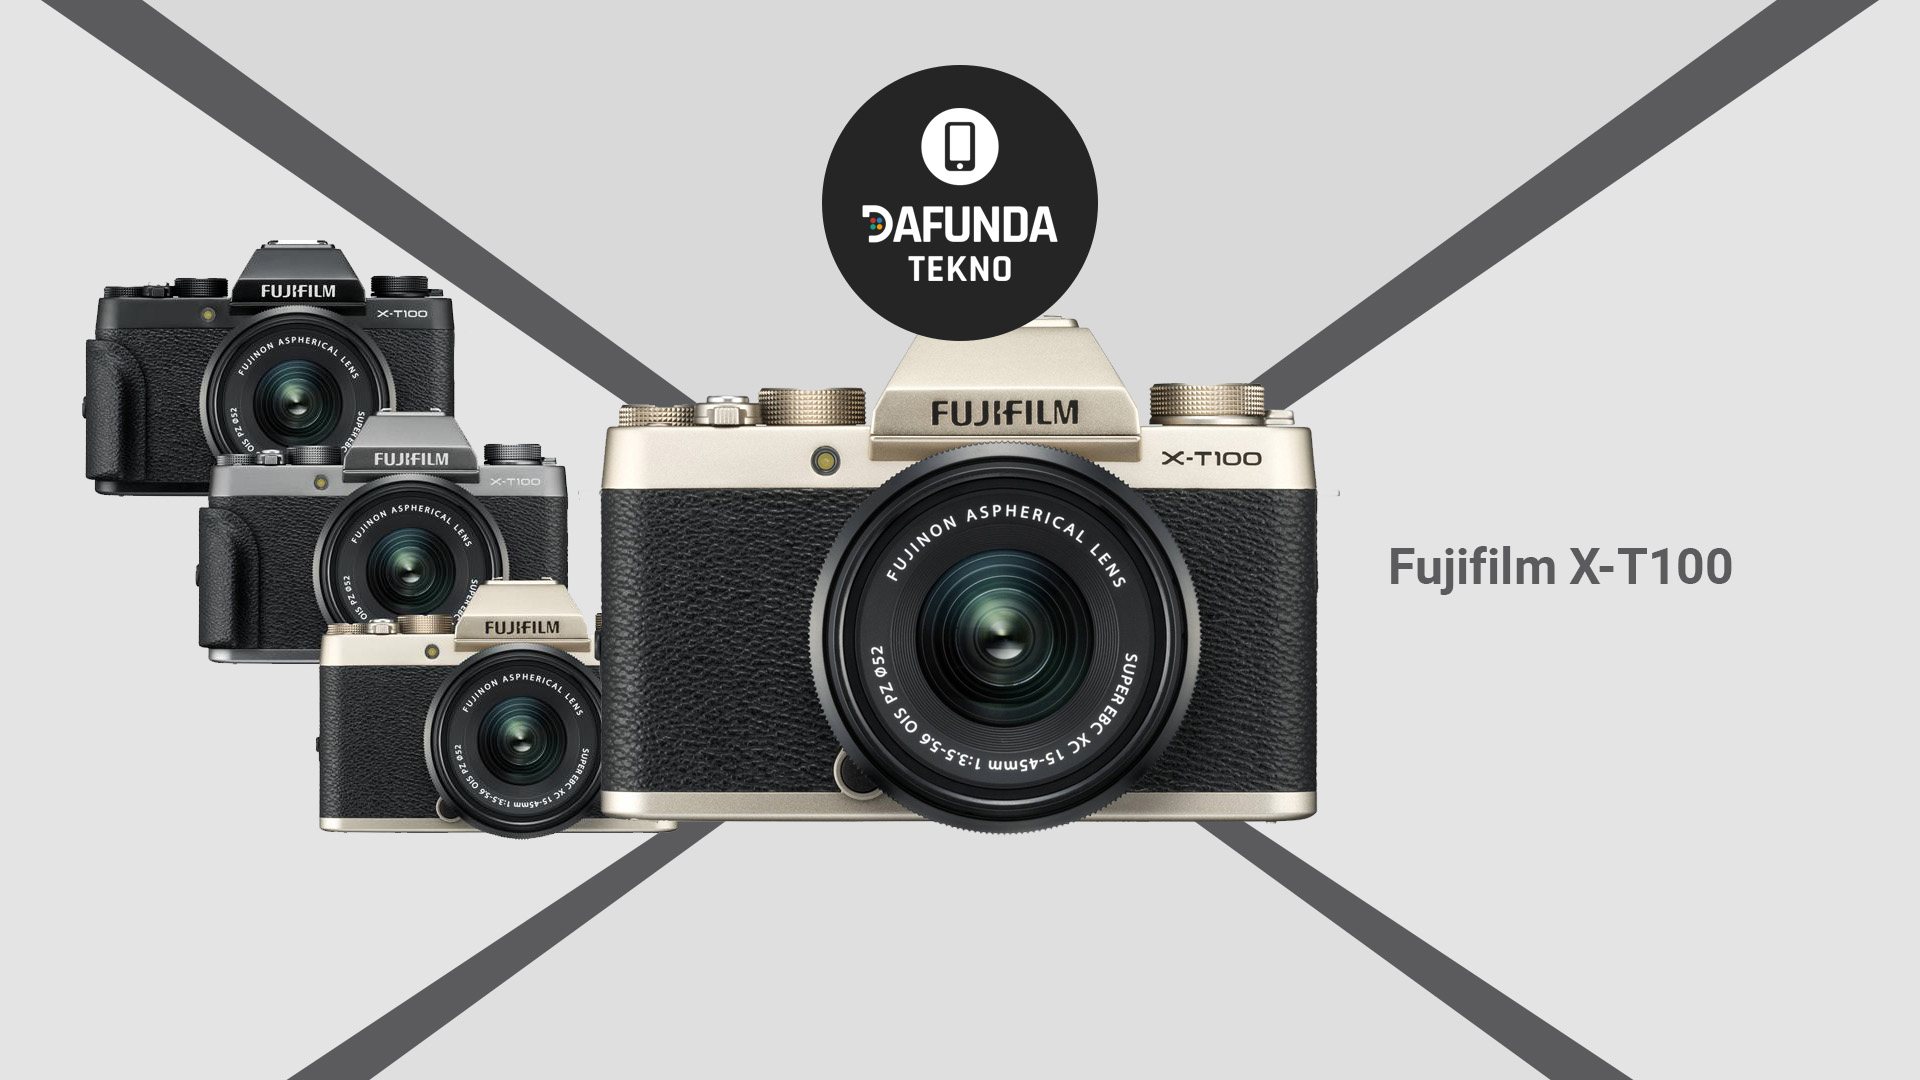 Kamera mirrorless terbaik Fujifilm X T100